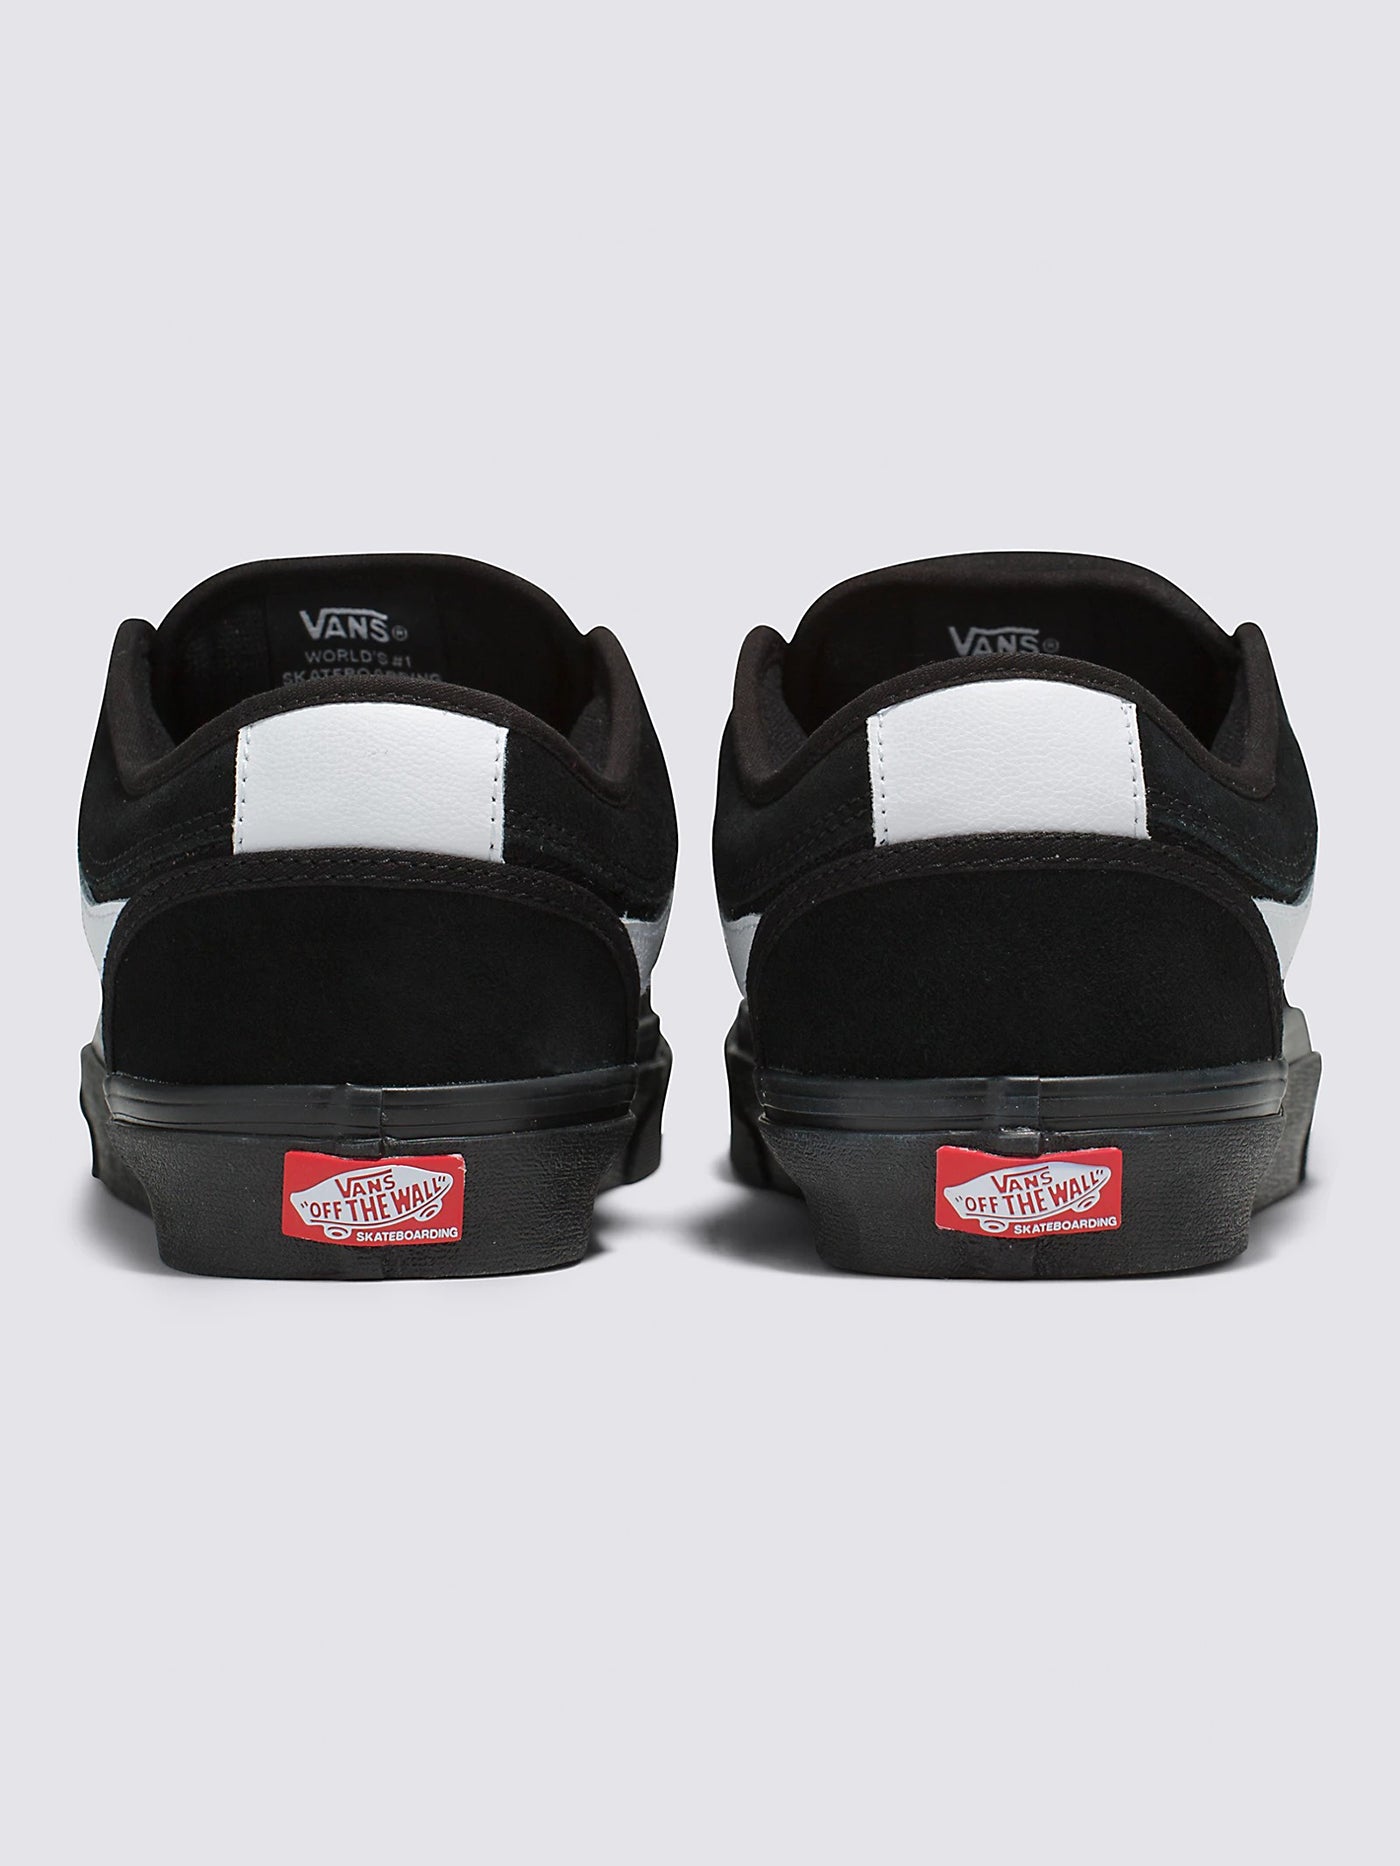 Vans Skate Chukka Low Sidestripe Black/Black/White Shoes